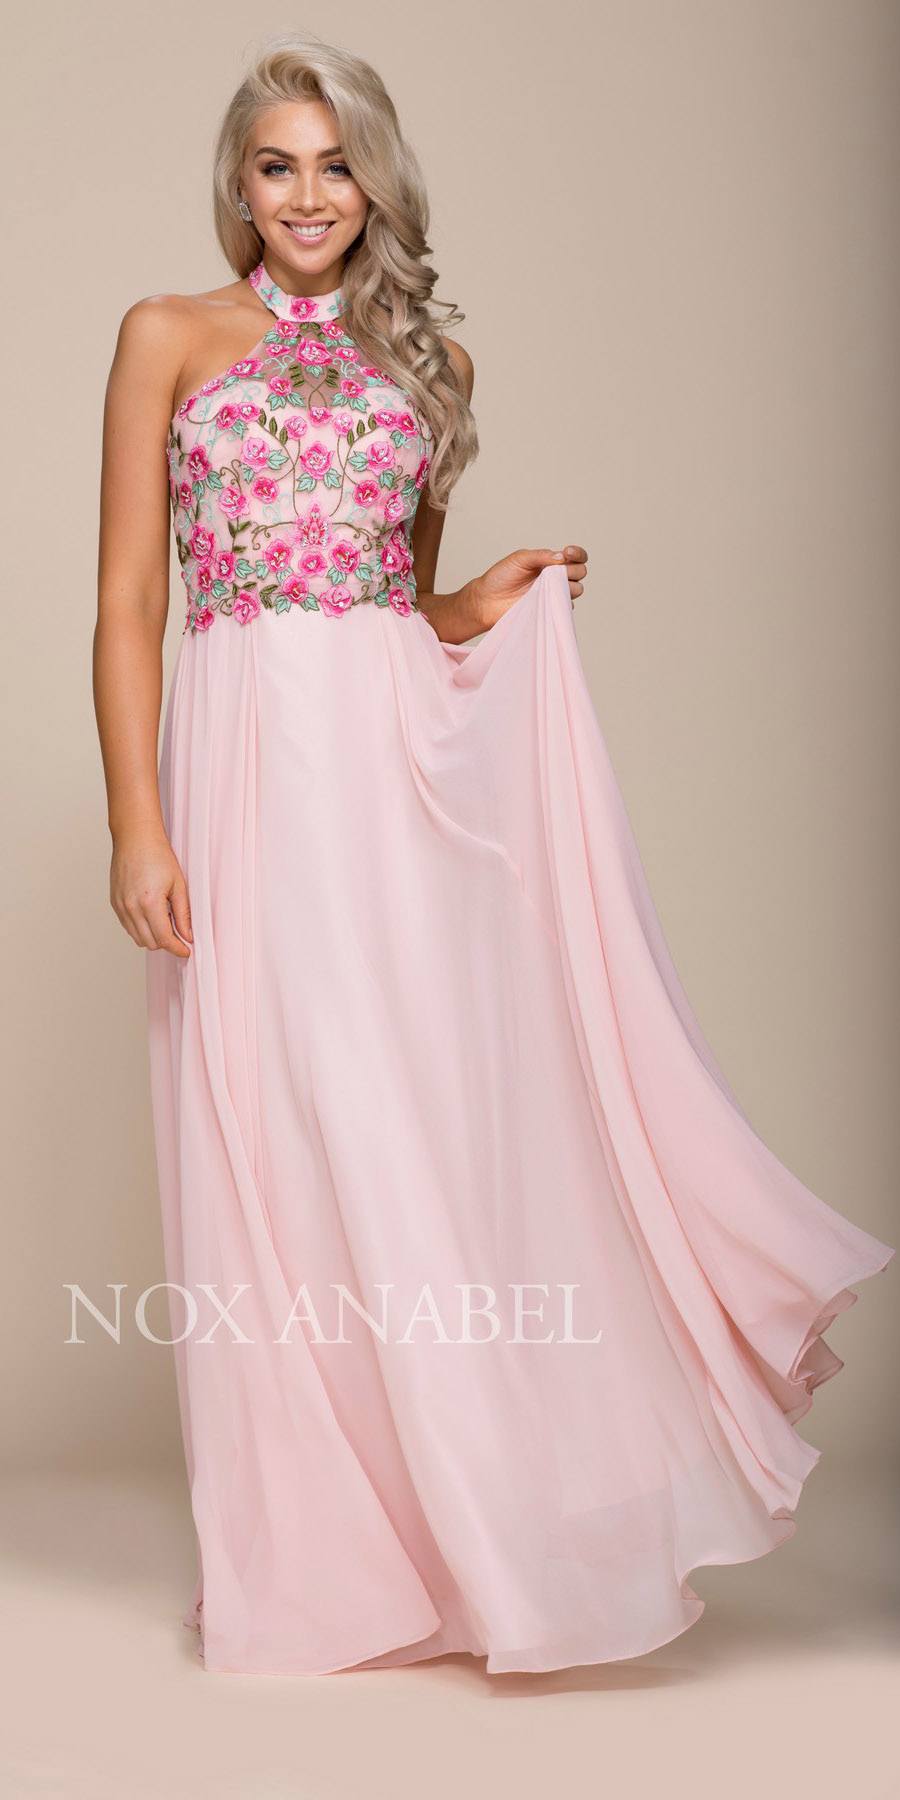 Nox Anabel 8326 Embroidered Bodice Halter Open Back Long Formal Dress